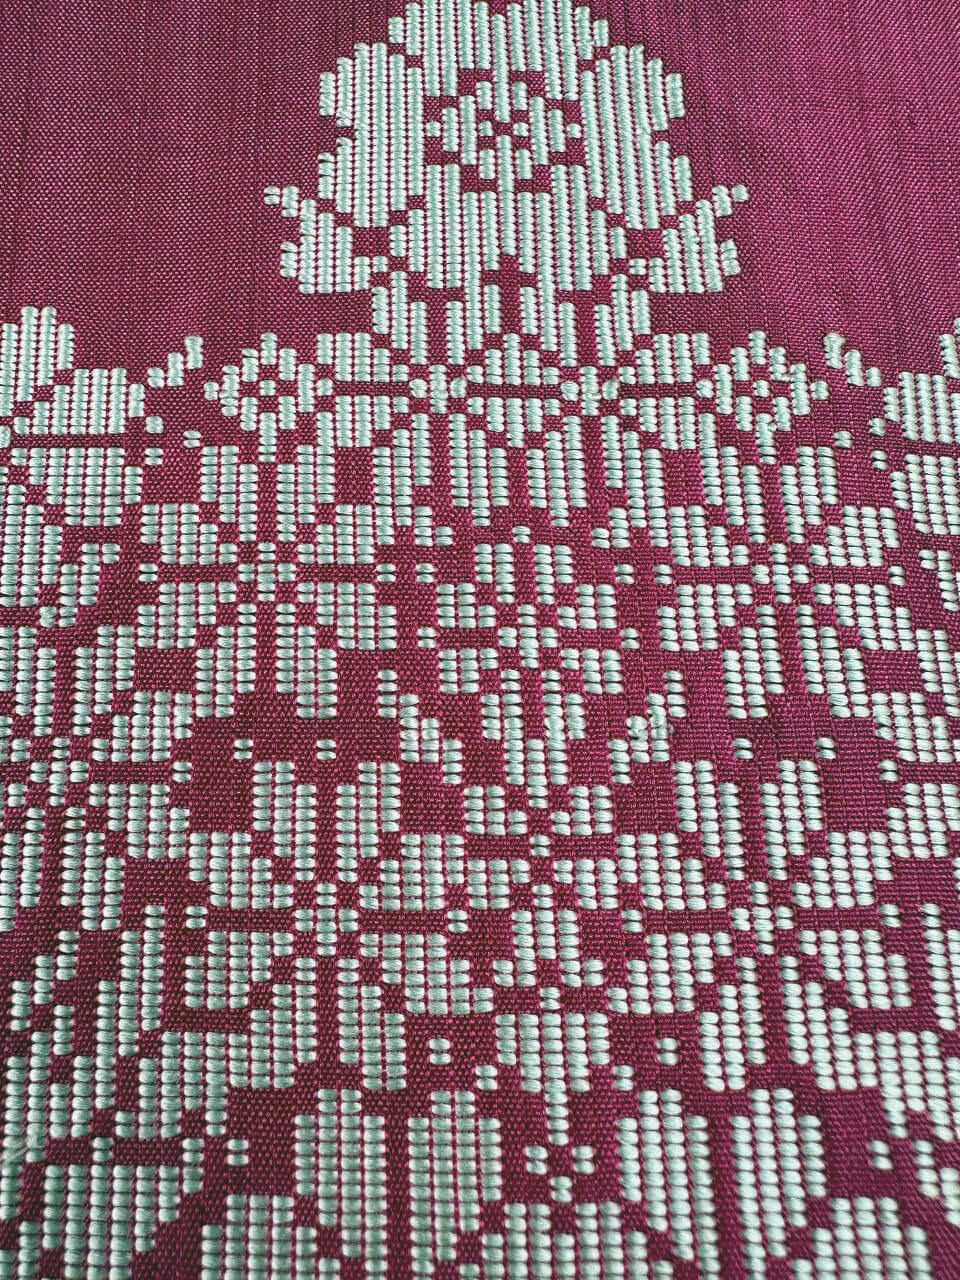 Garden Grace Blossoms handwoven silk songket shawl textile